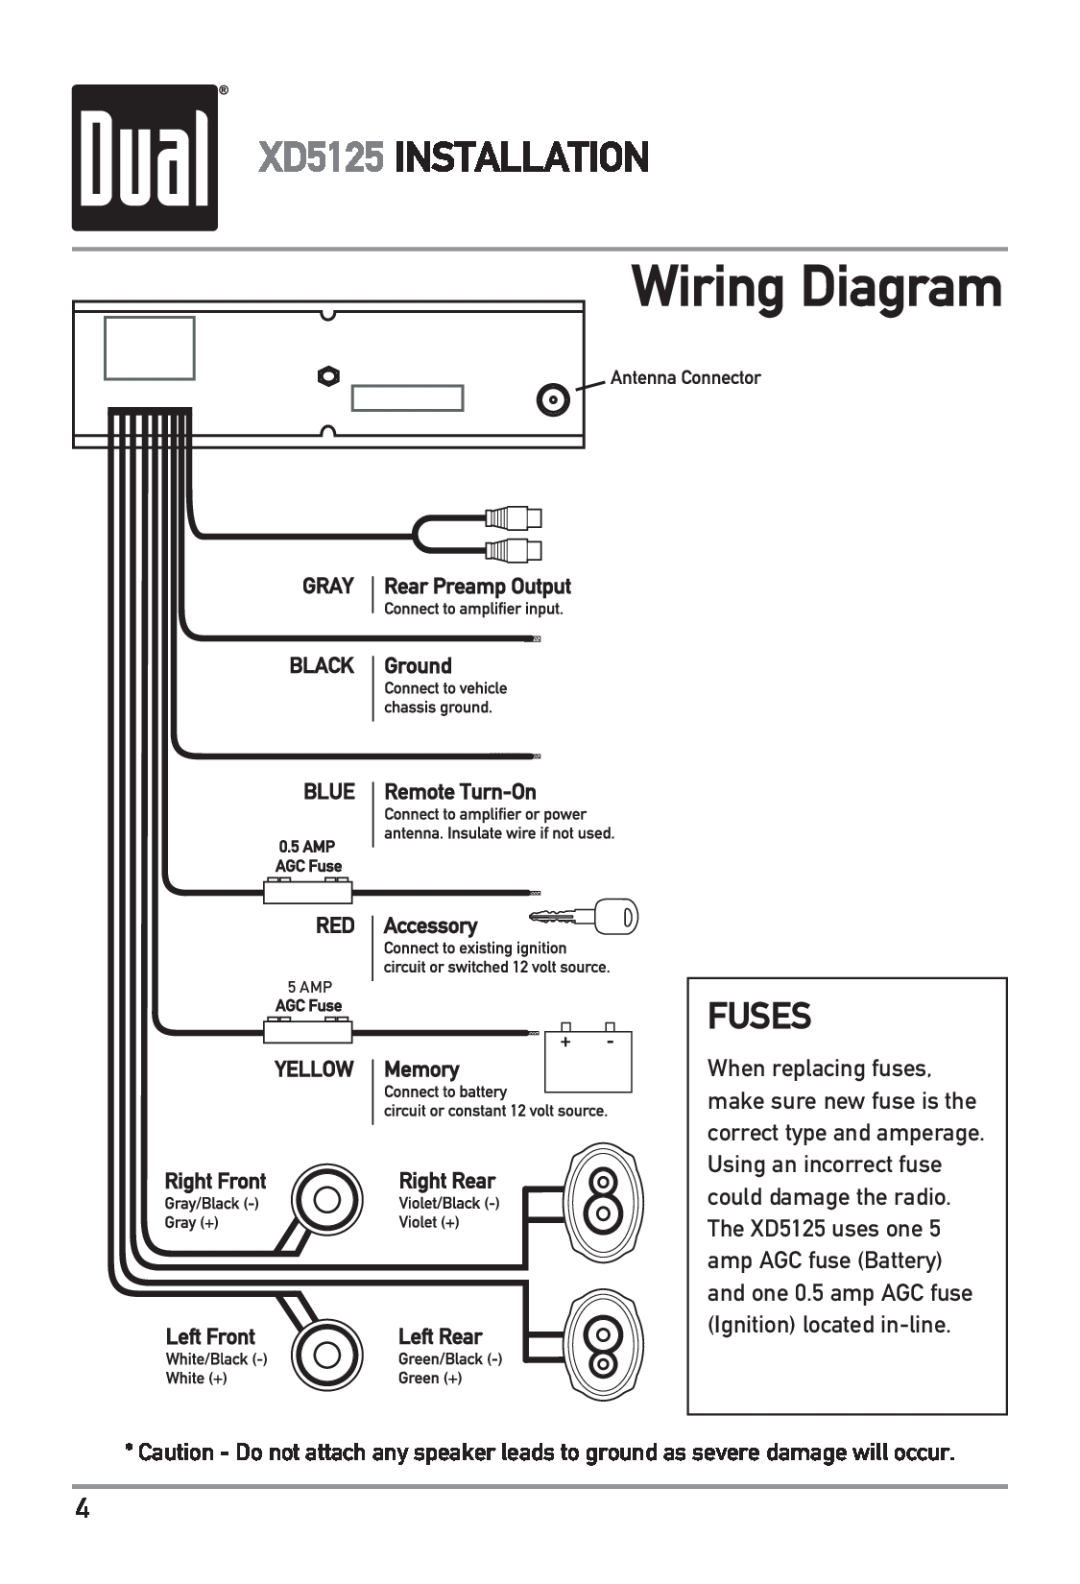 Dual owner manual Wiring Diagram, Fuses, XD5125 INSTALLATION 